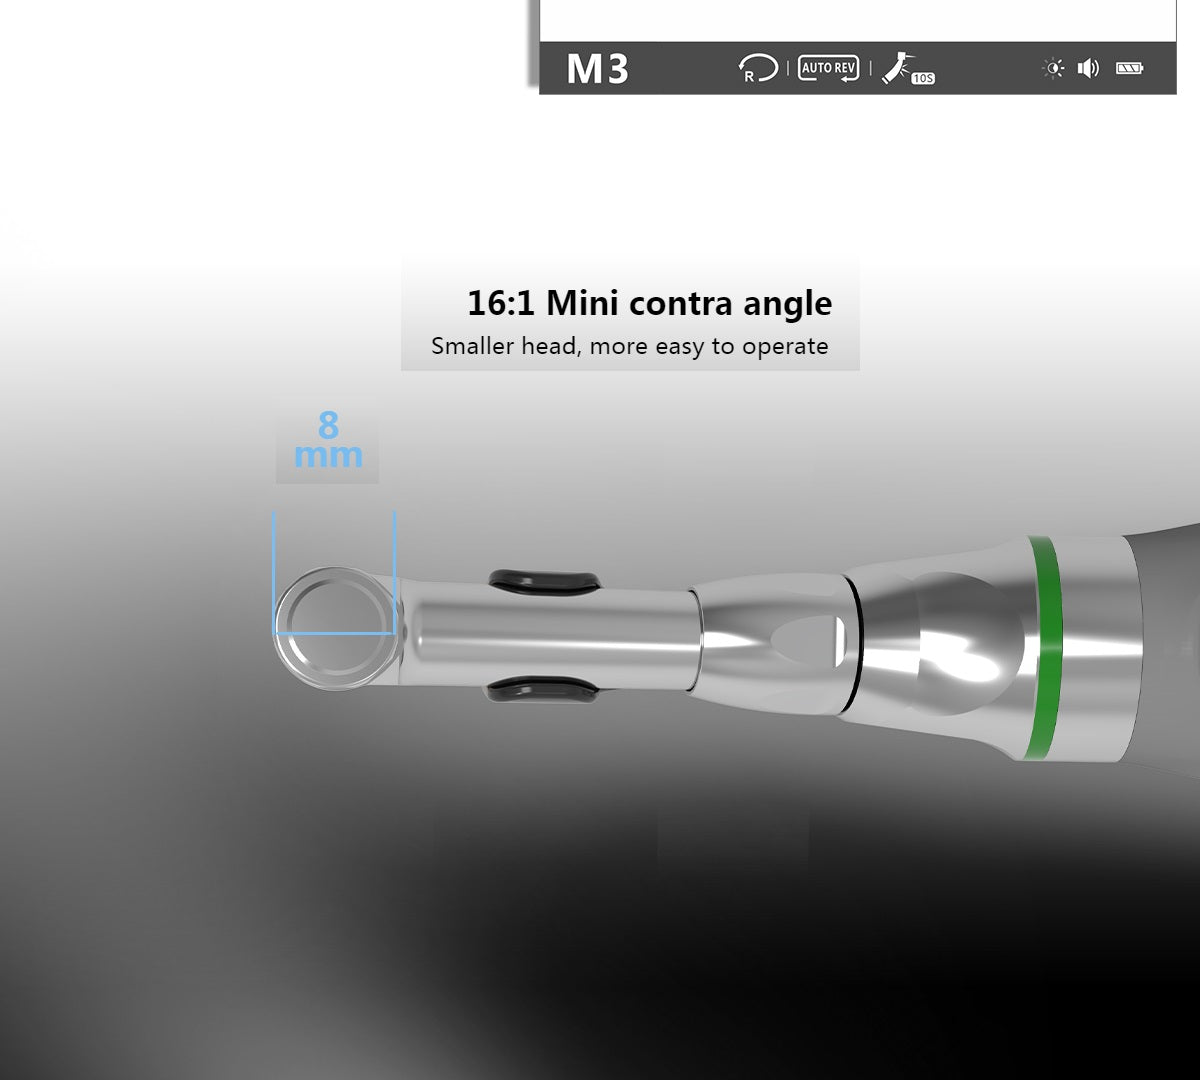 COXO Dental  Endo motors with Apex Locator C-SMART-I PRO